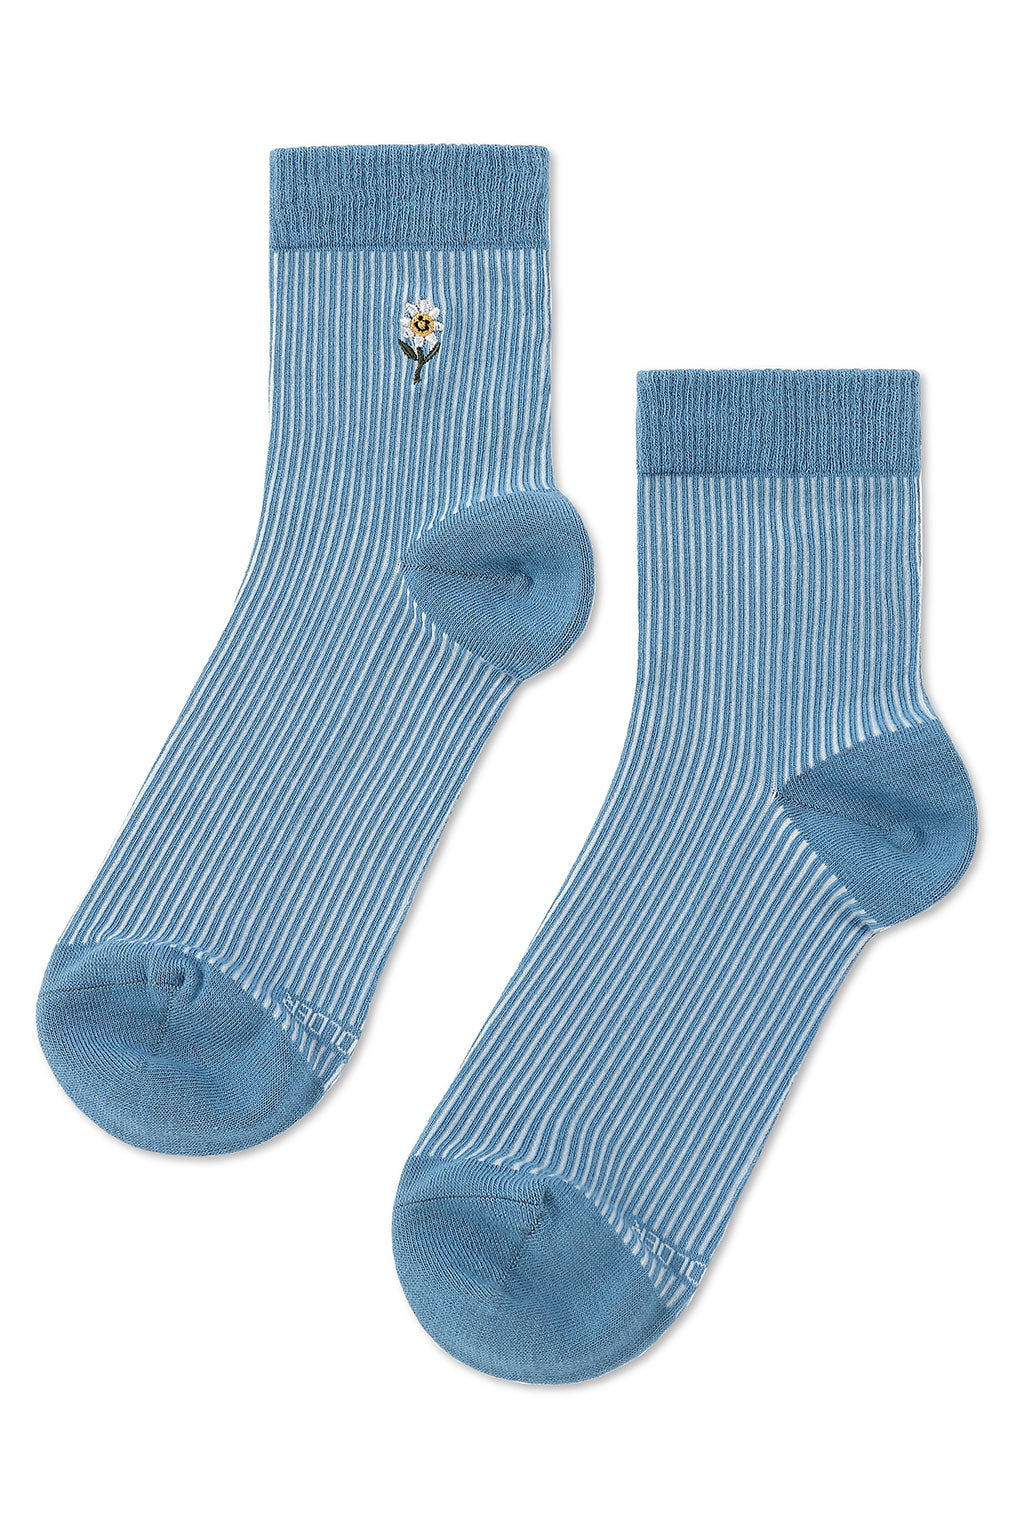 Tailored Union Daisy ankle blue socks 